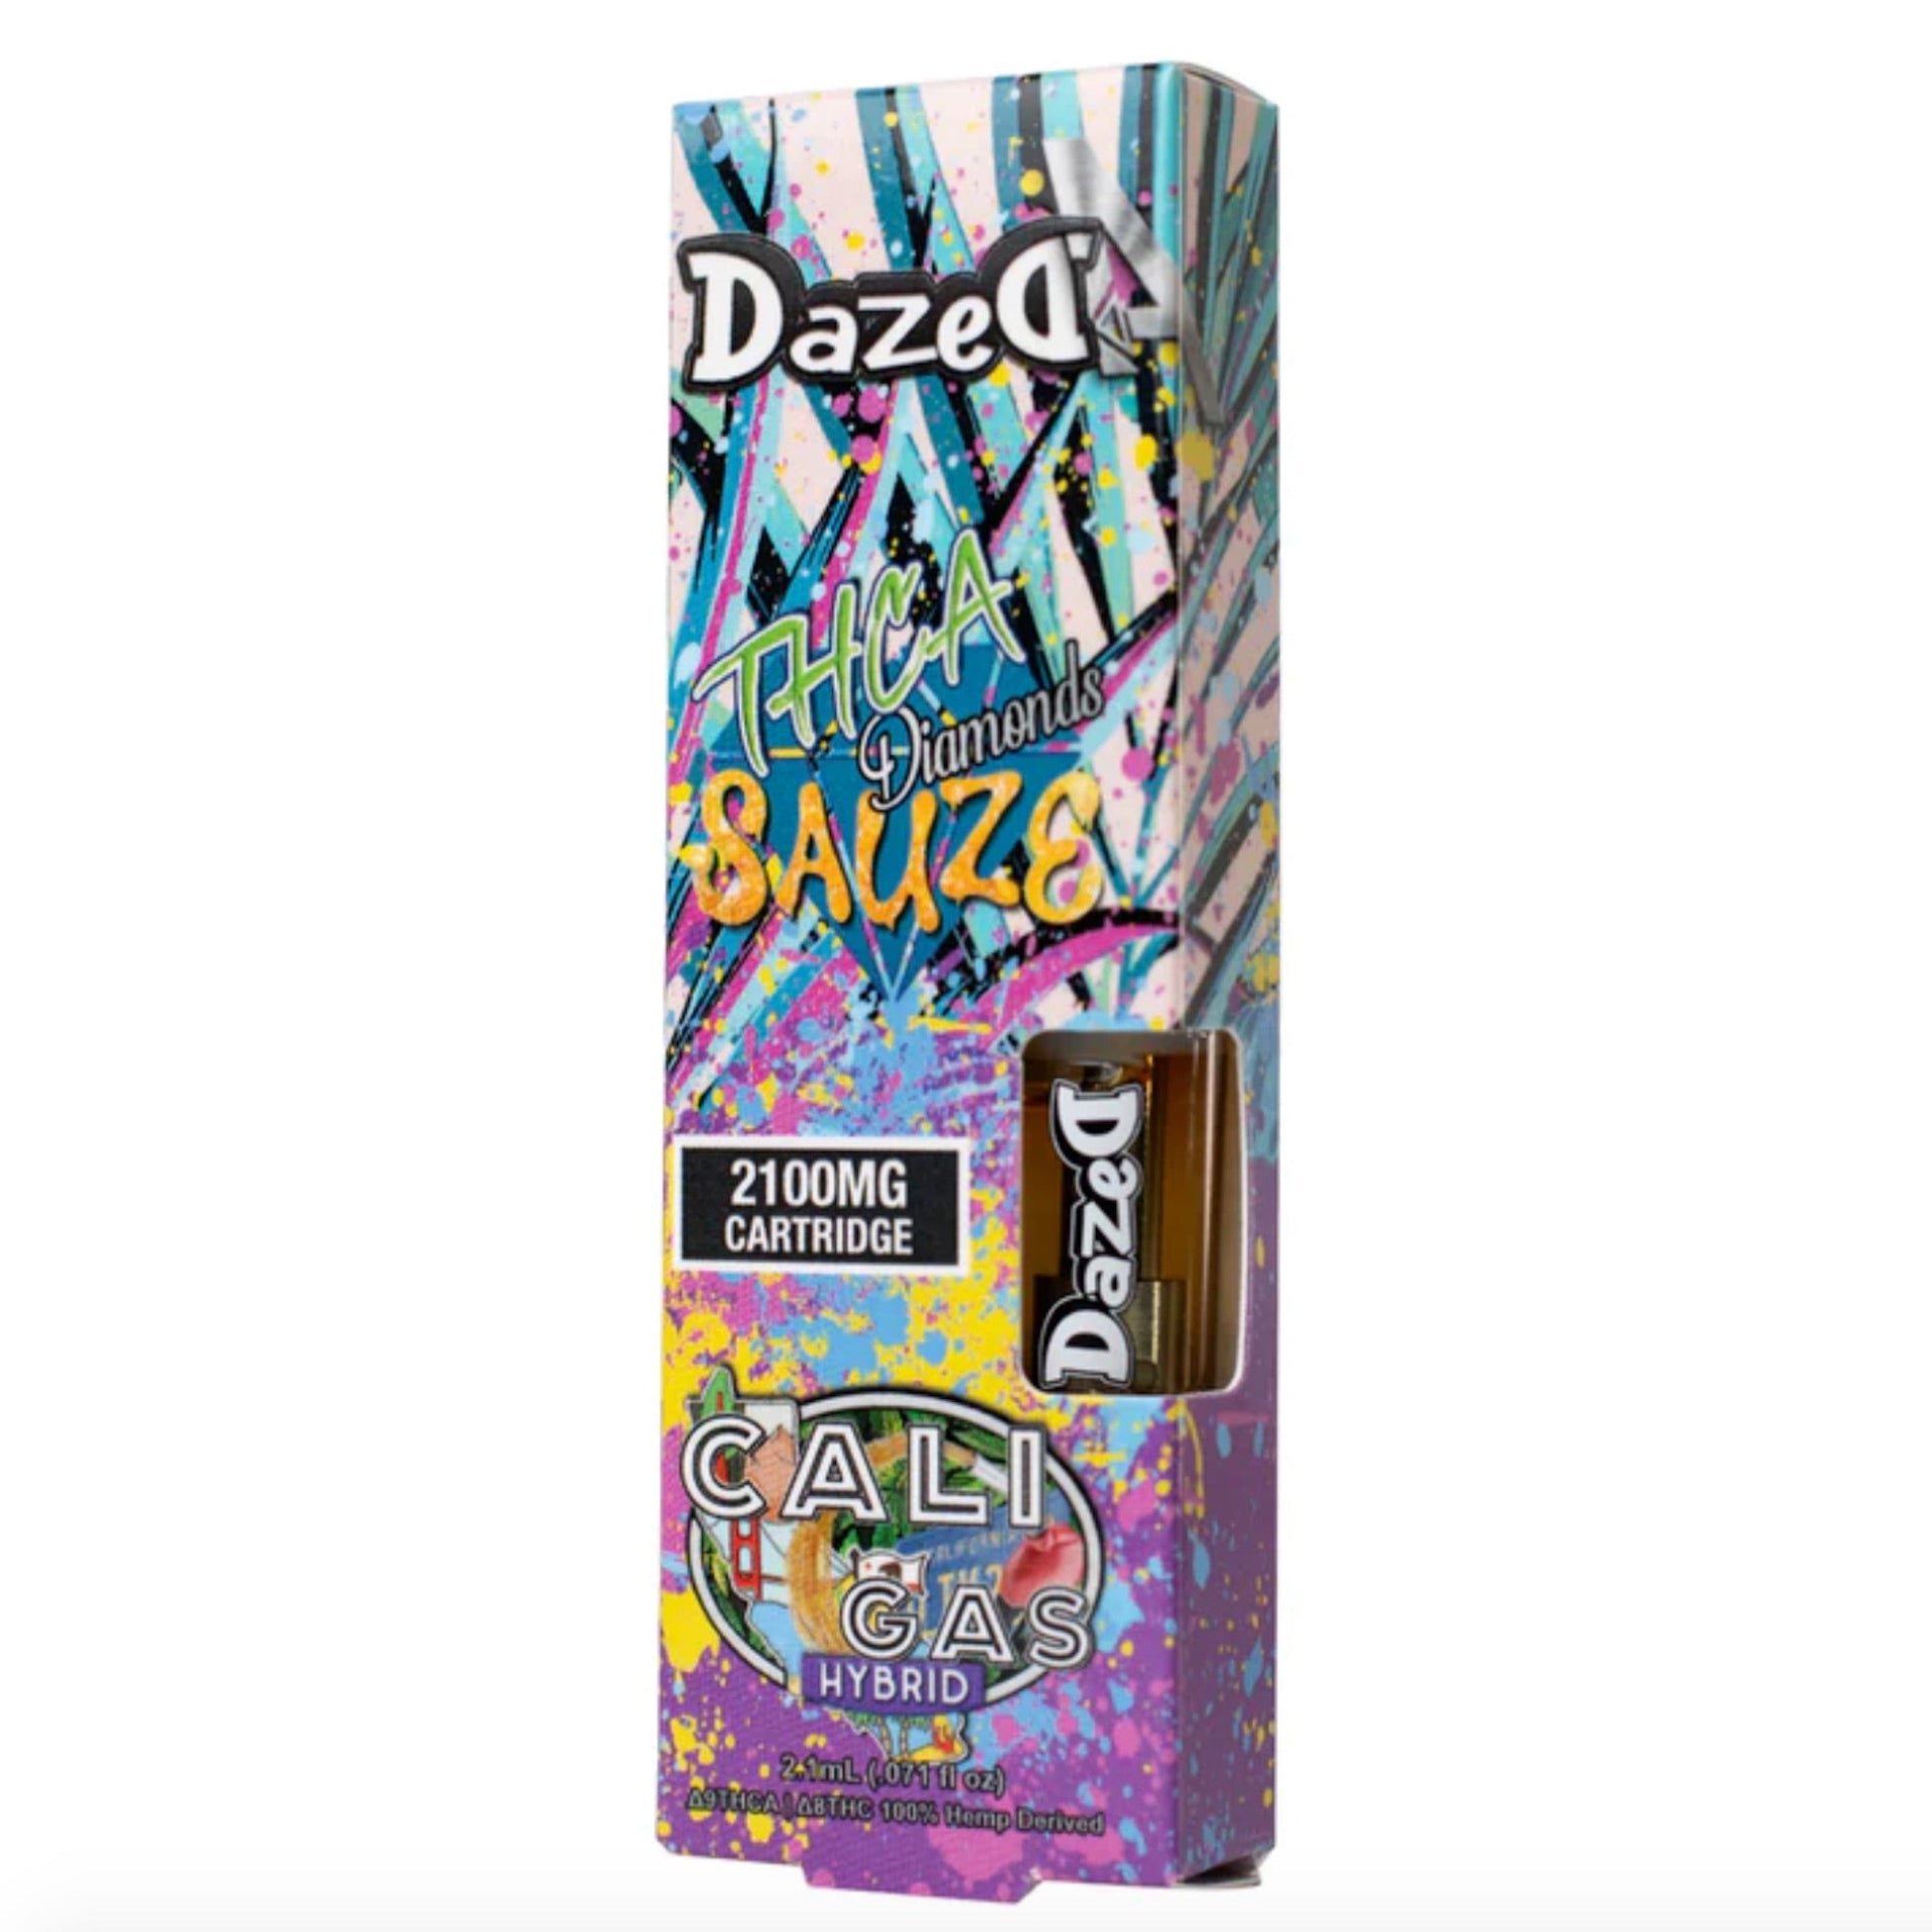 Dazed THC-A Diamond Sauze Cartridge - 2100mg